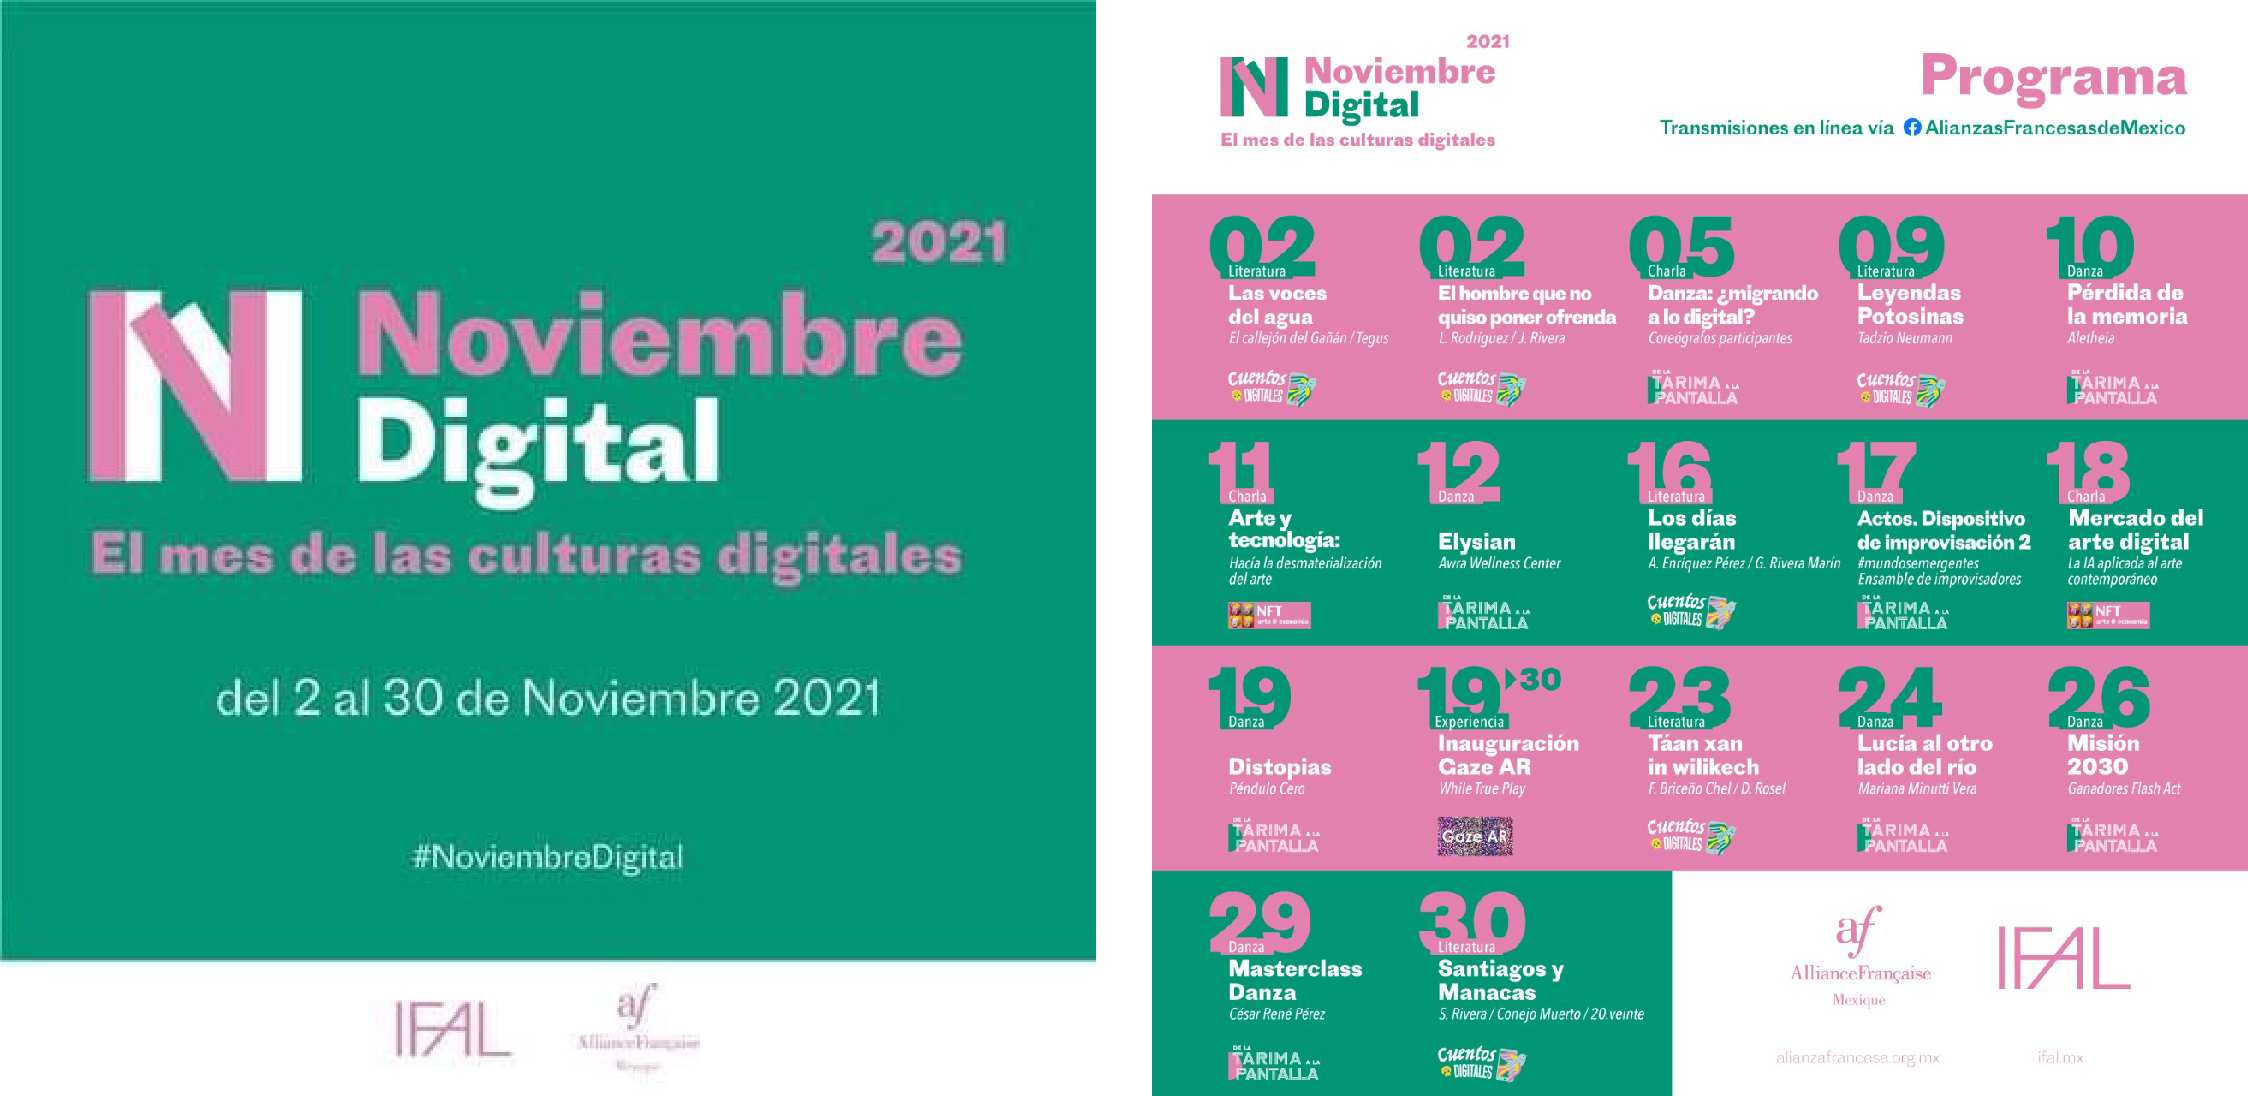 Noviembre Digital 2021